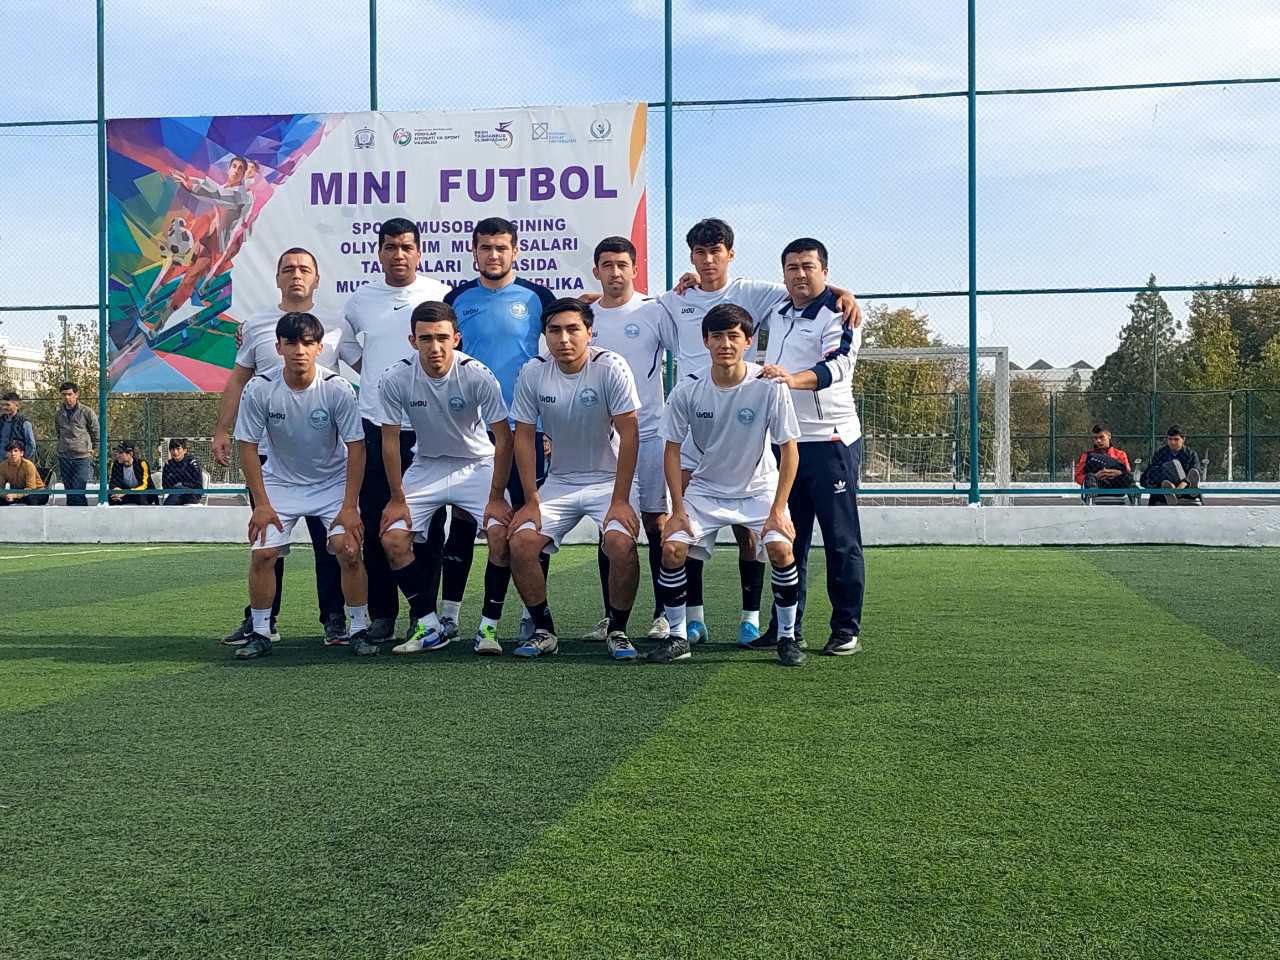 Победа зафиксирована: команда нашего университета заняла 1-е место по мини-футболу